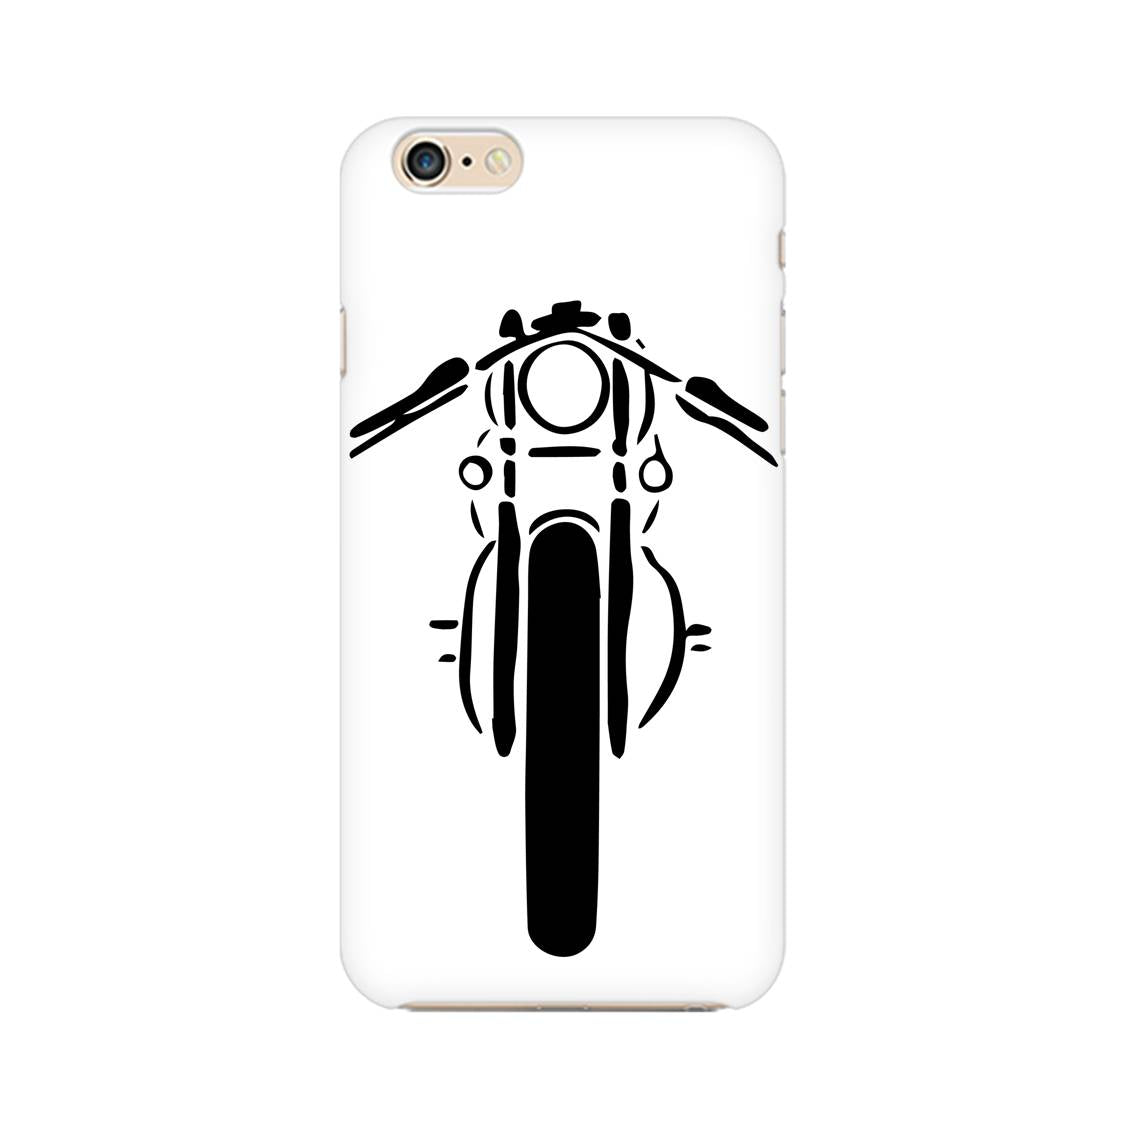 phone cover for bike